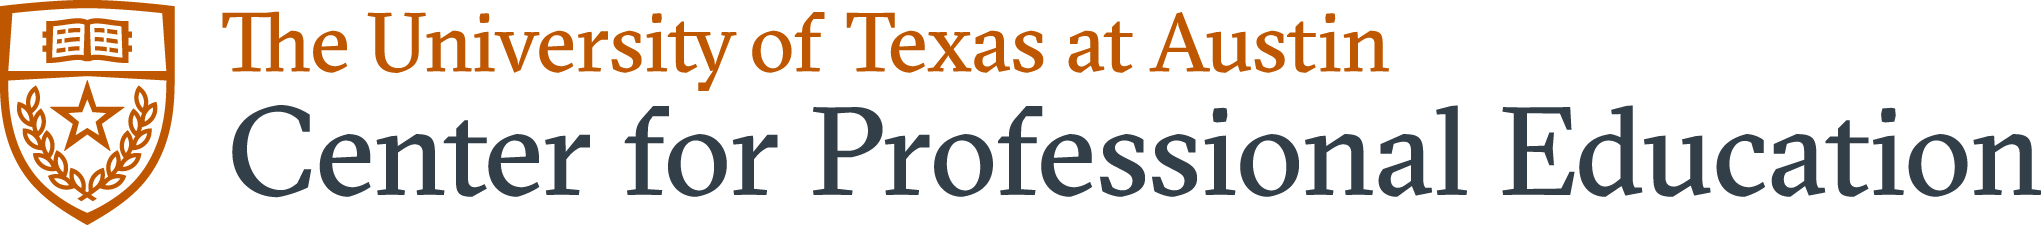 The Center For Professional Education at UT Austin Logo